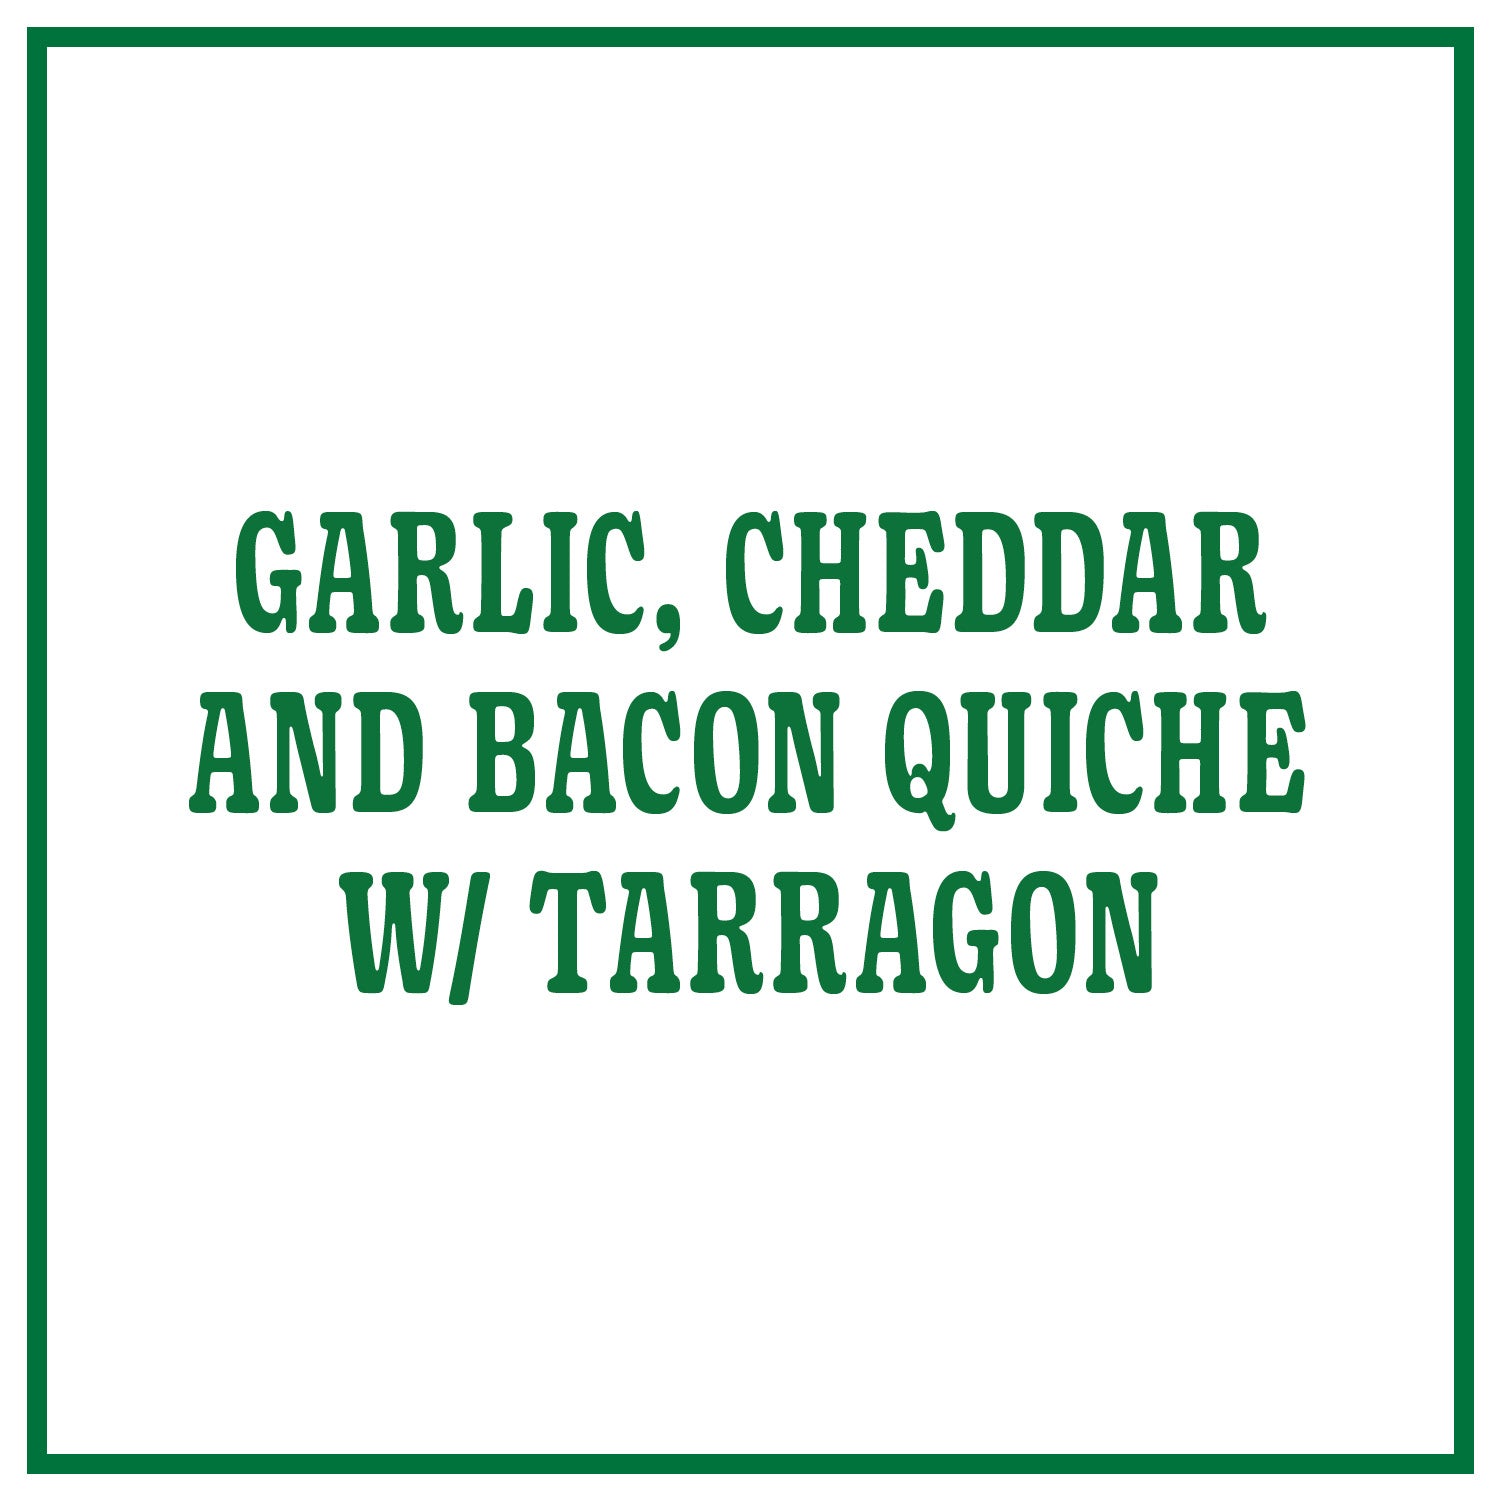 Garlic, Cheddar and Bacon Quiche with Tarragon